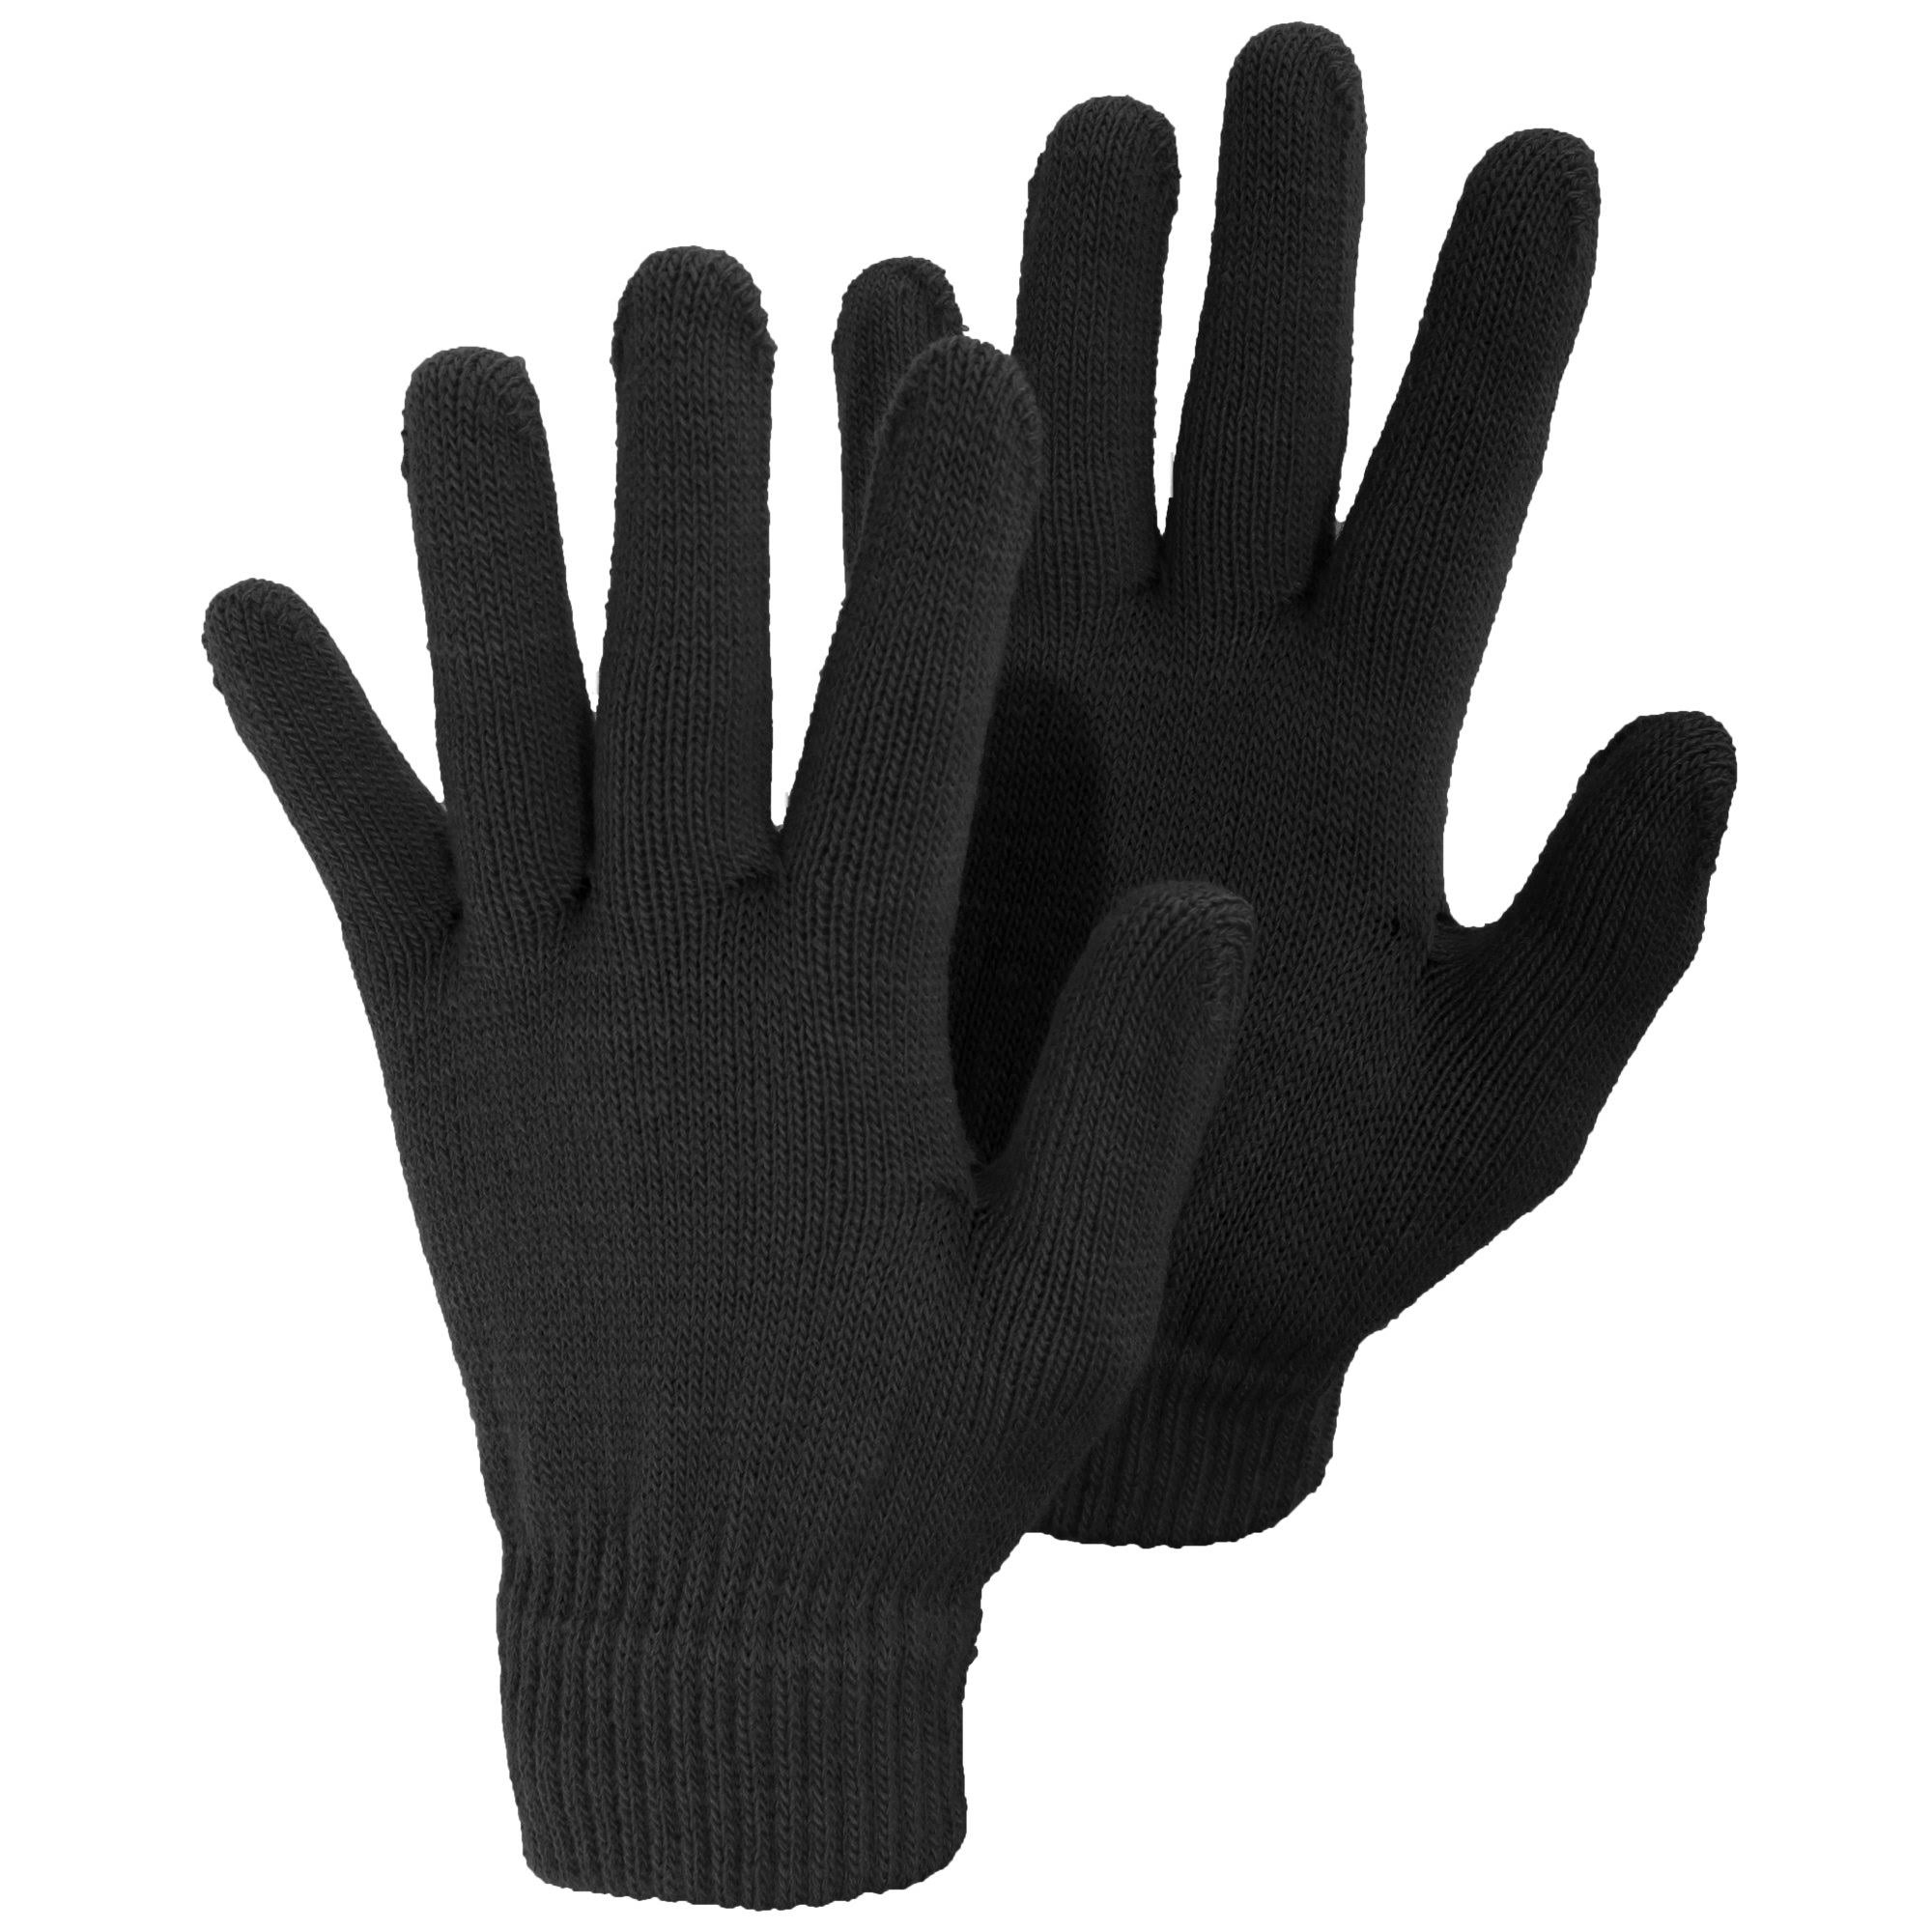 Rjm Ladies Thermal Magic Gloves - Black